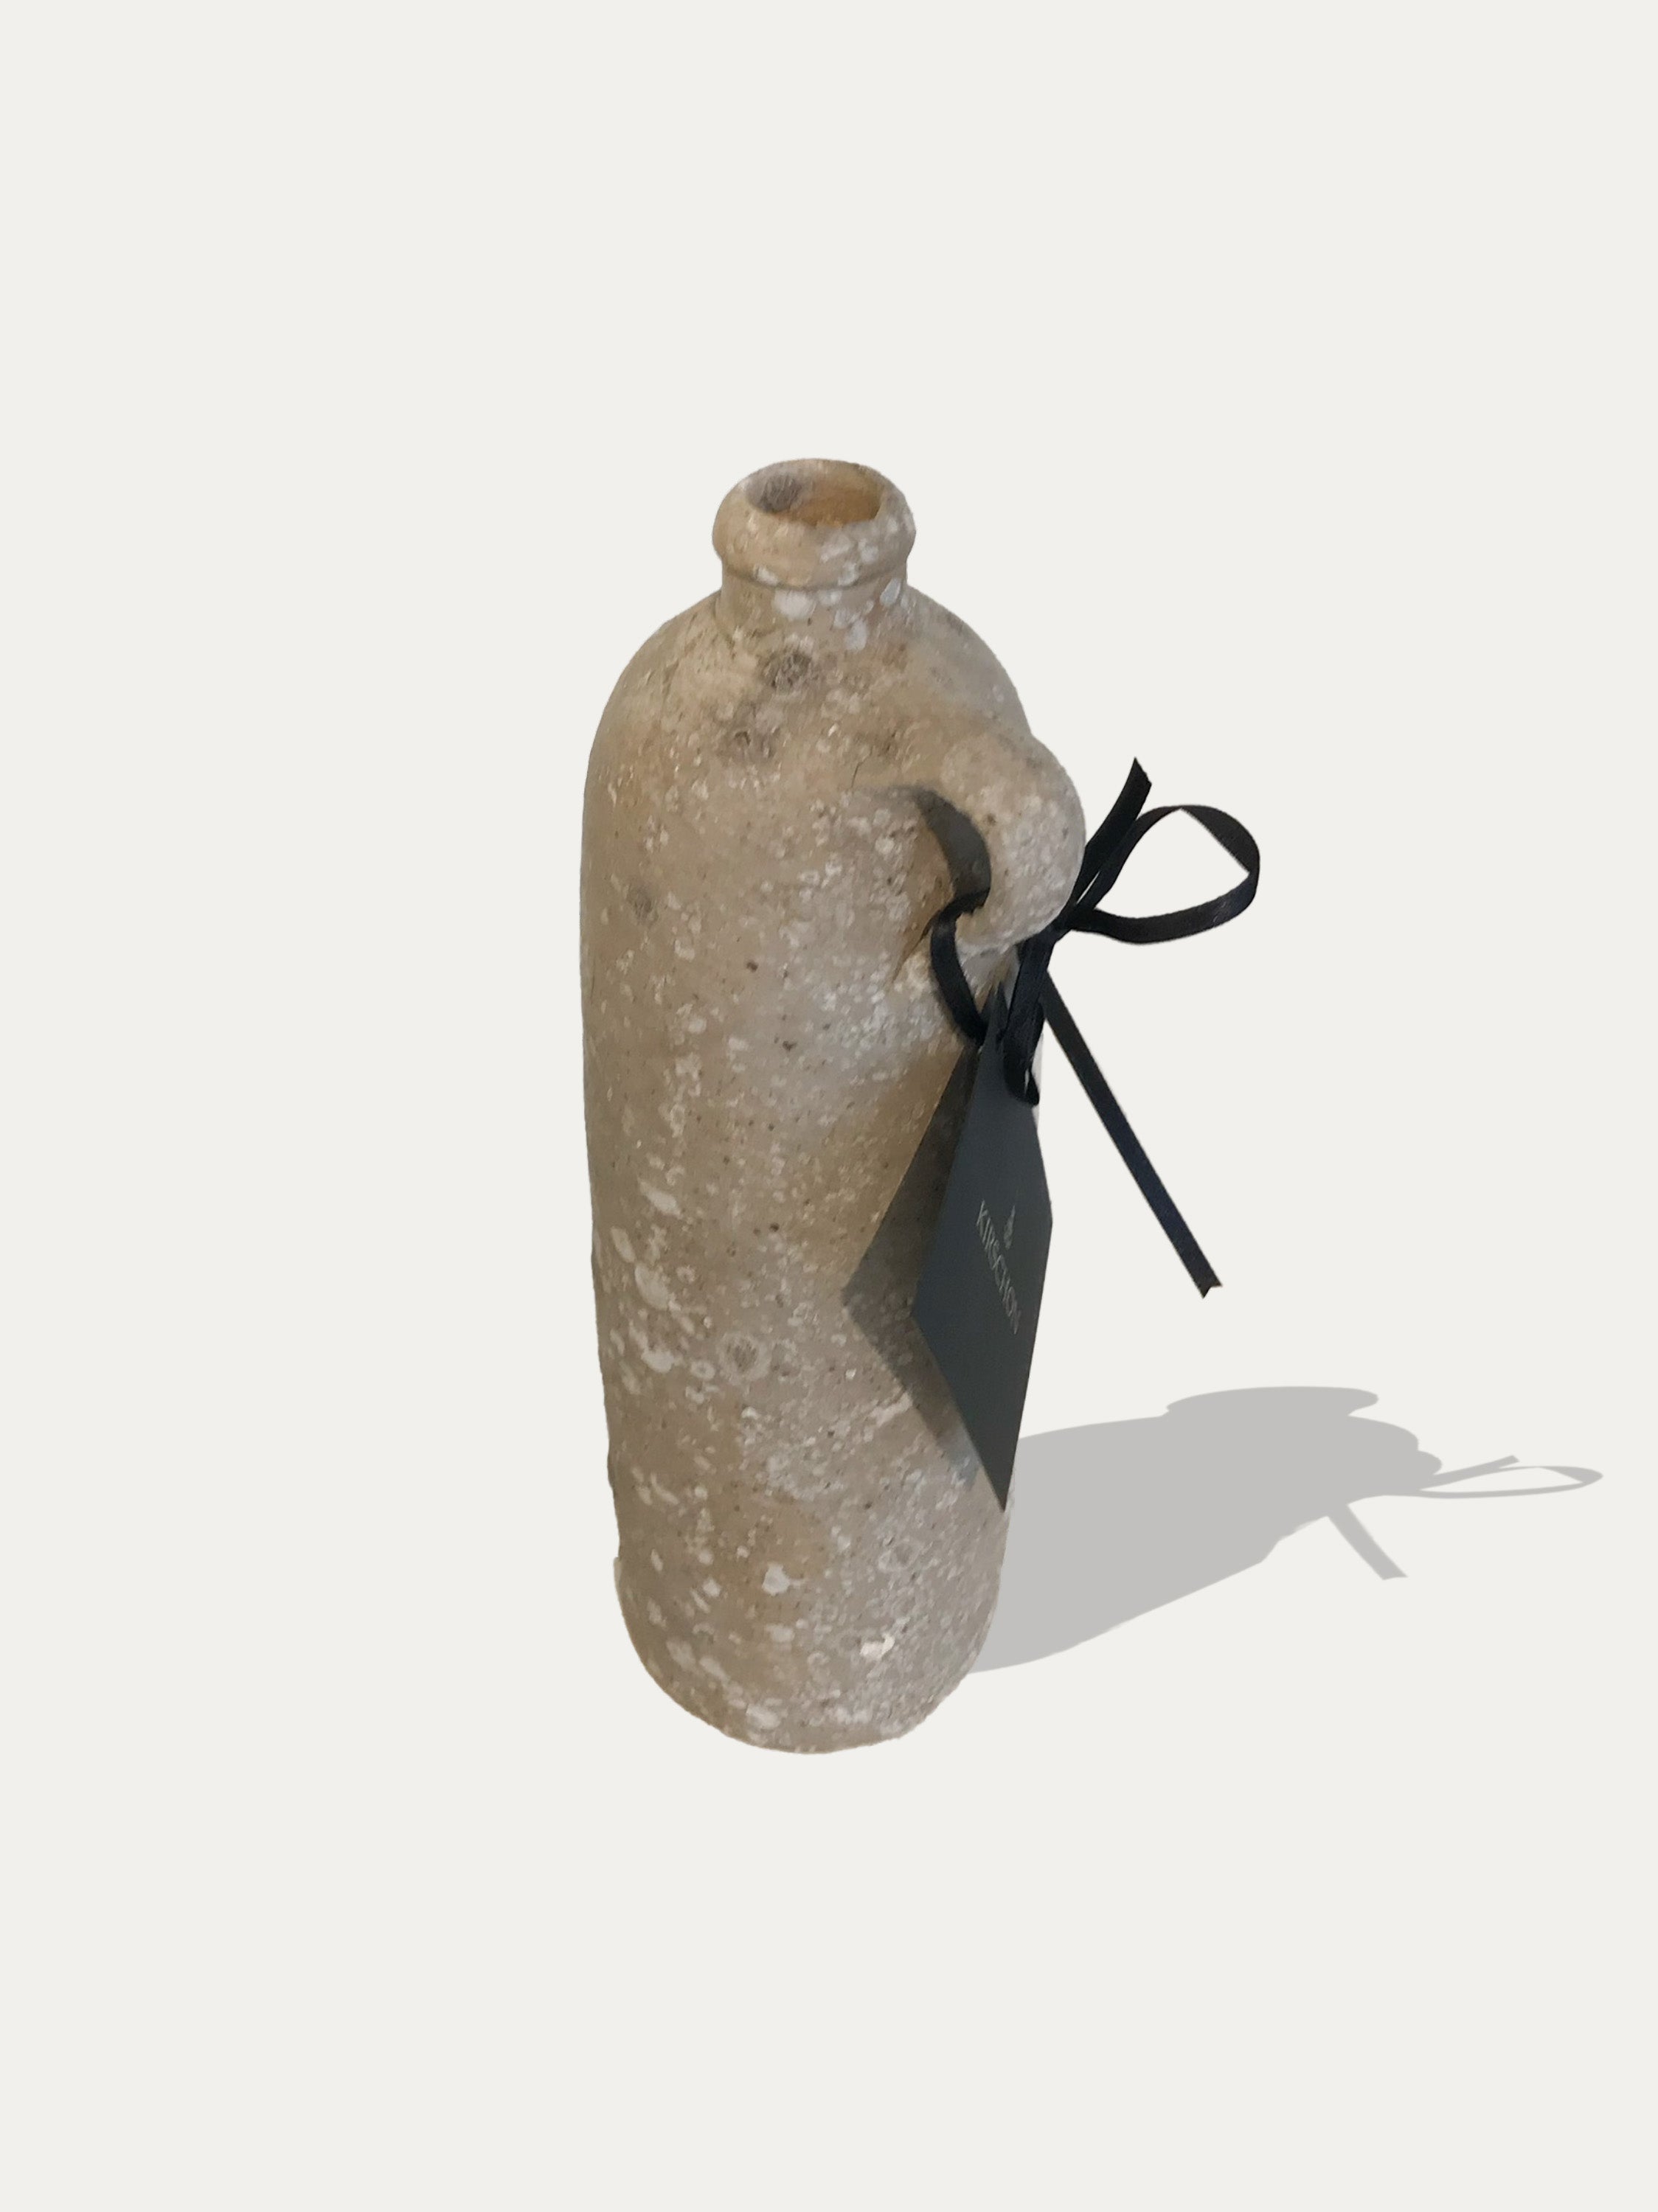 Terracotta Water jug from Borneo